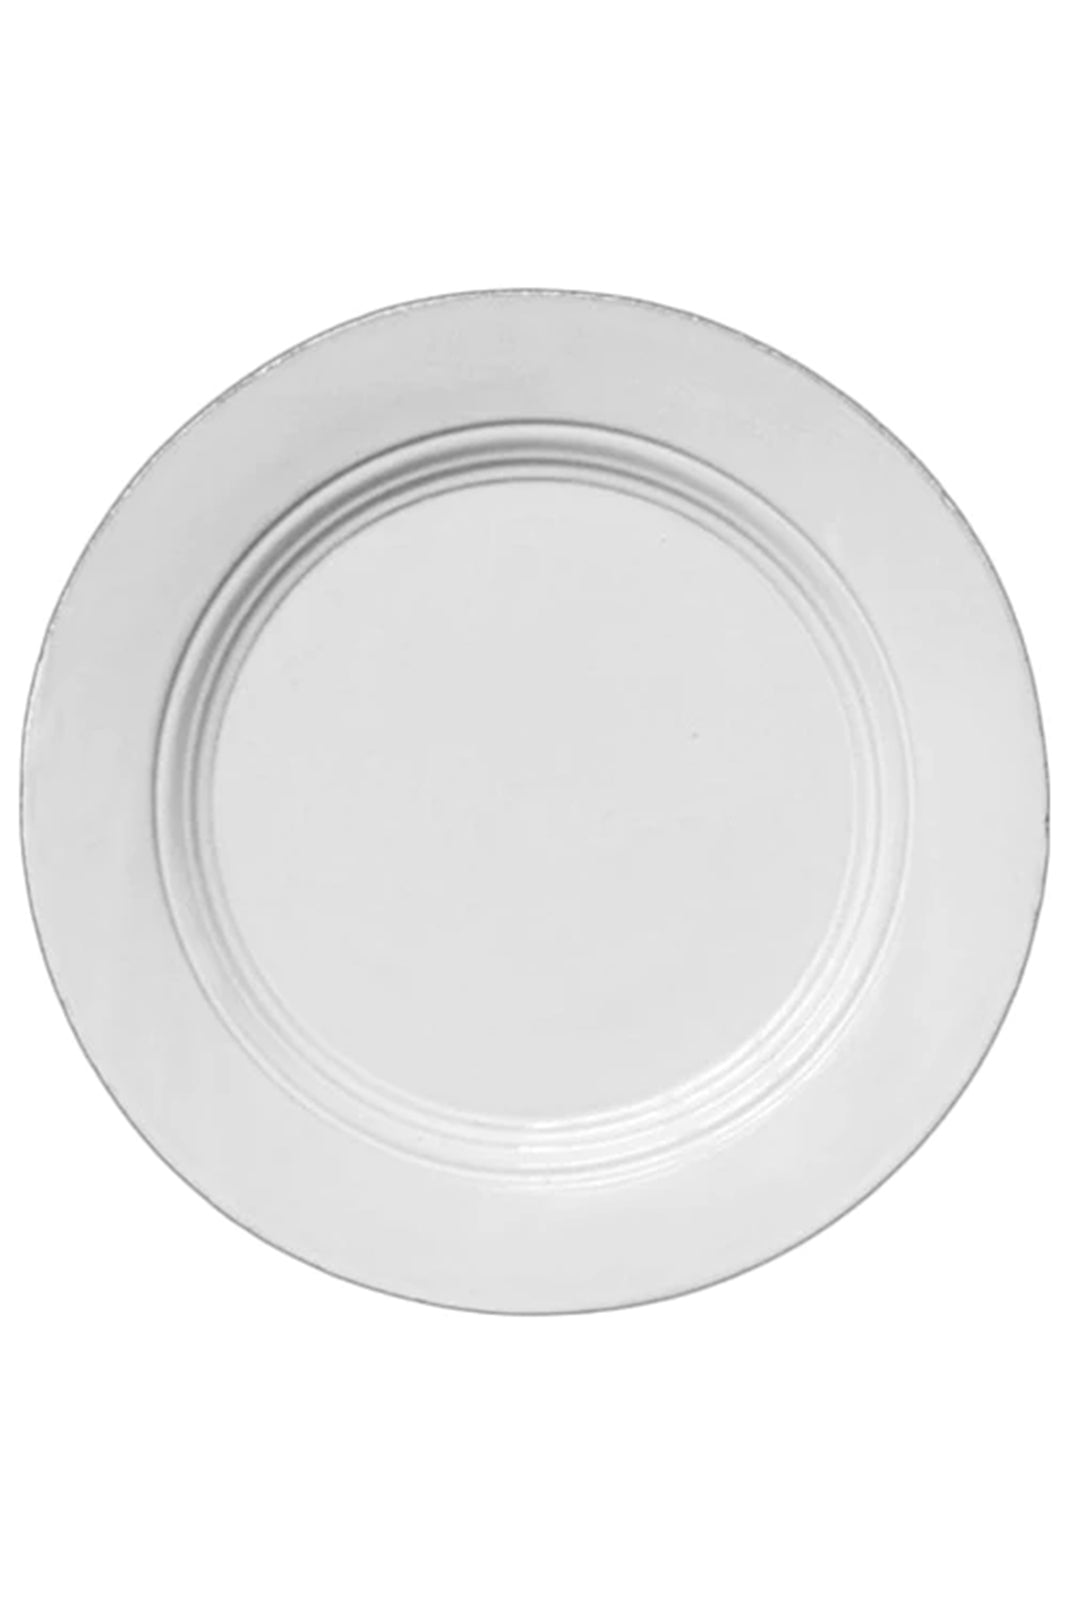 Grand Chalet Large Dinner Plate